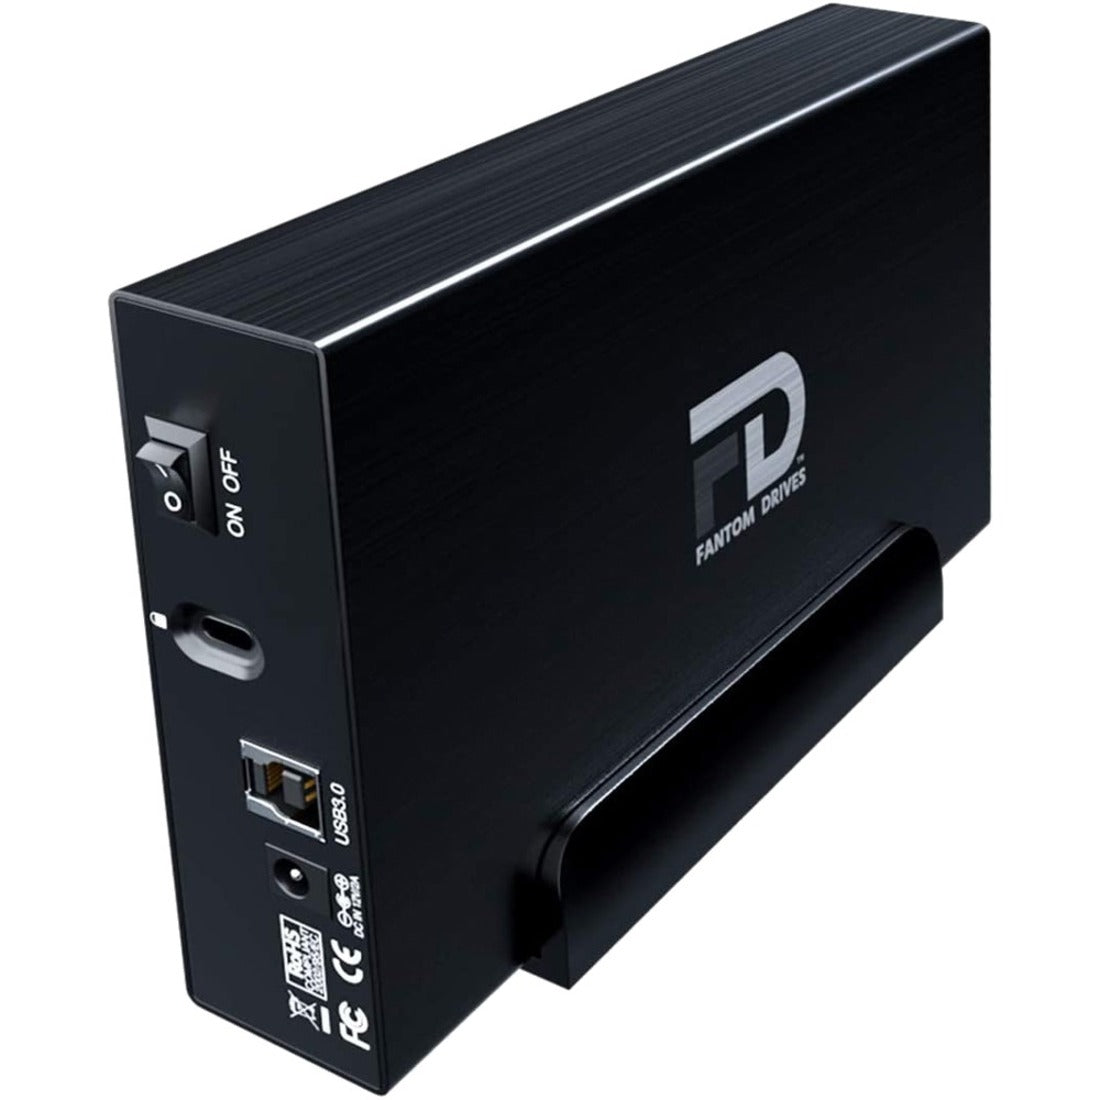 Fantom Drives 2TB External Hard Drive - GFORCE 3 - USB 3 Aluminum Black GF3B2000U